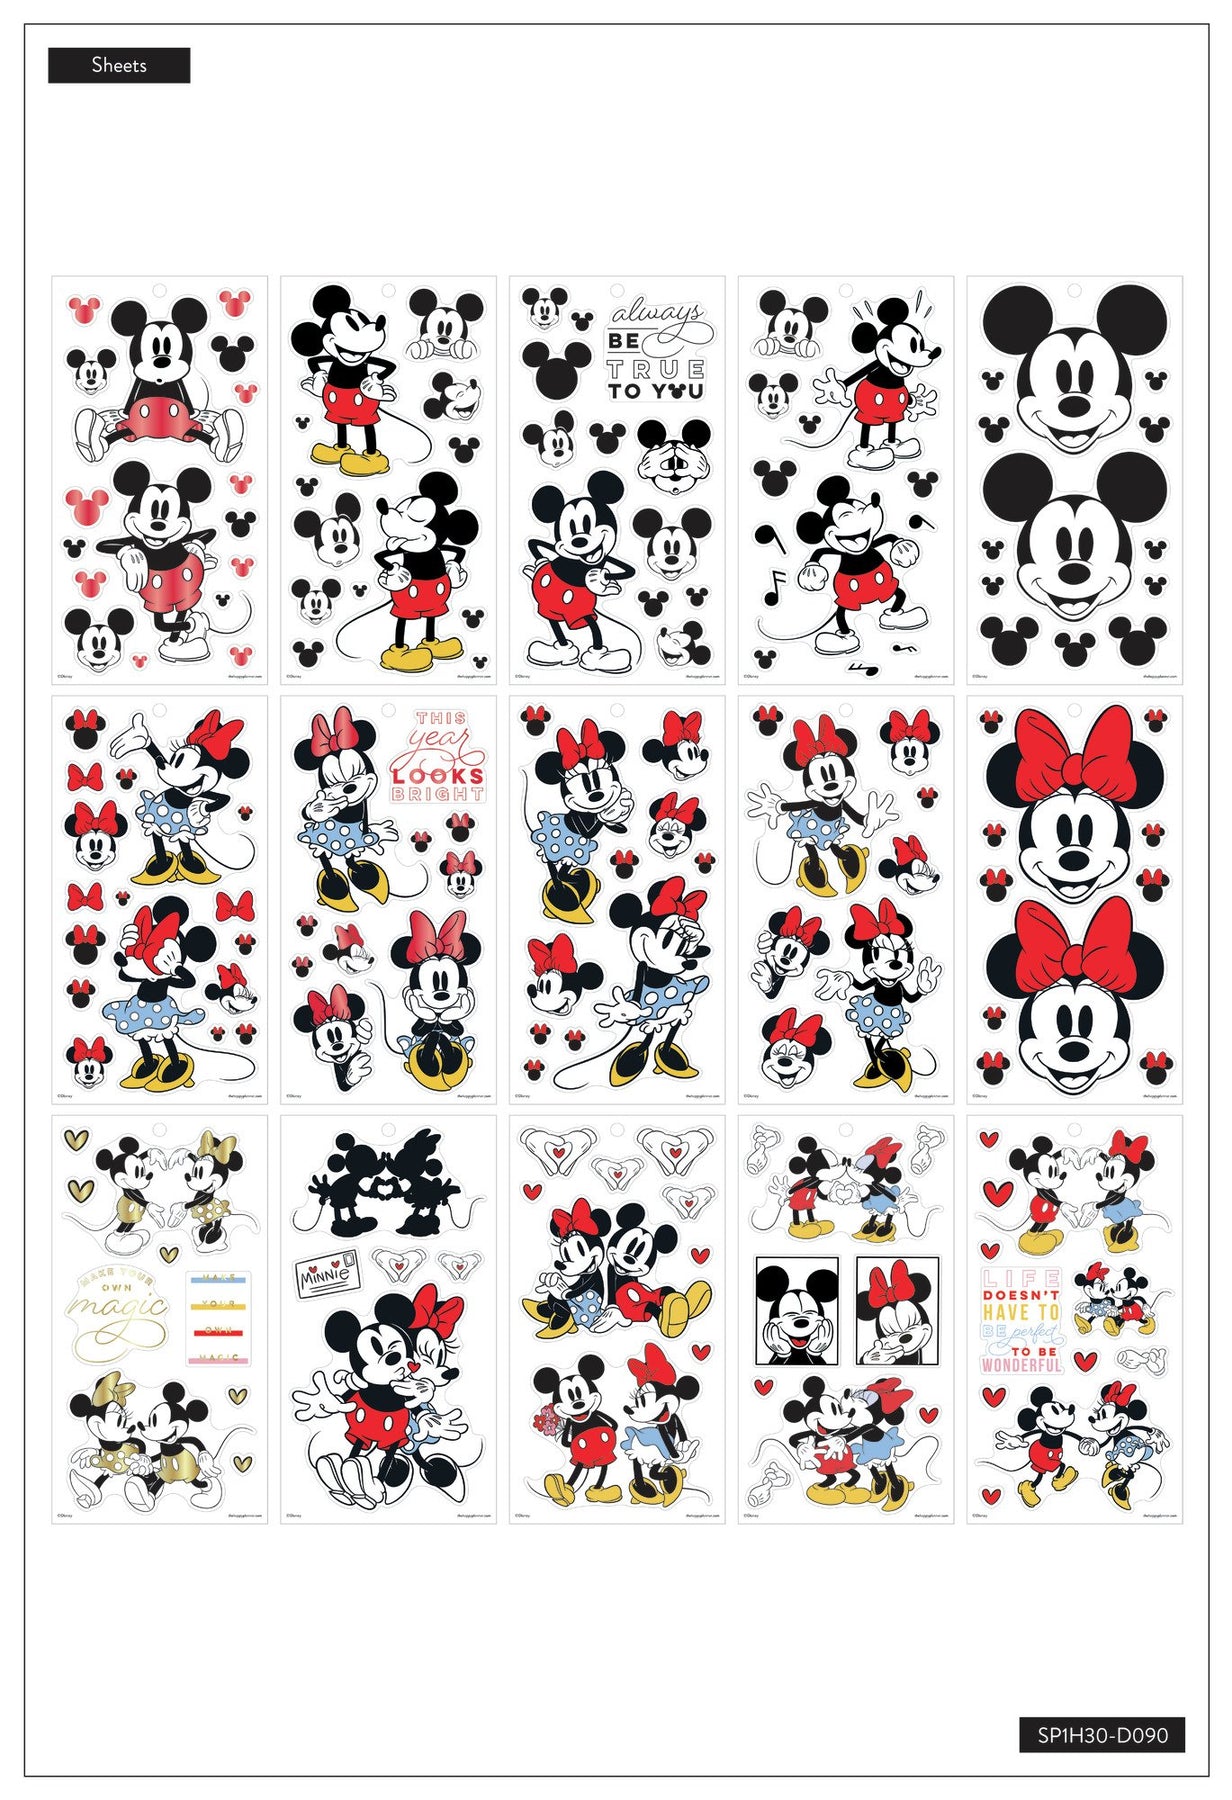 Happy Planner Disney Mickey & Friends Magic Plans Sticker Pad